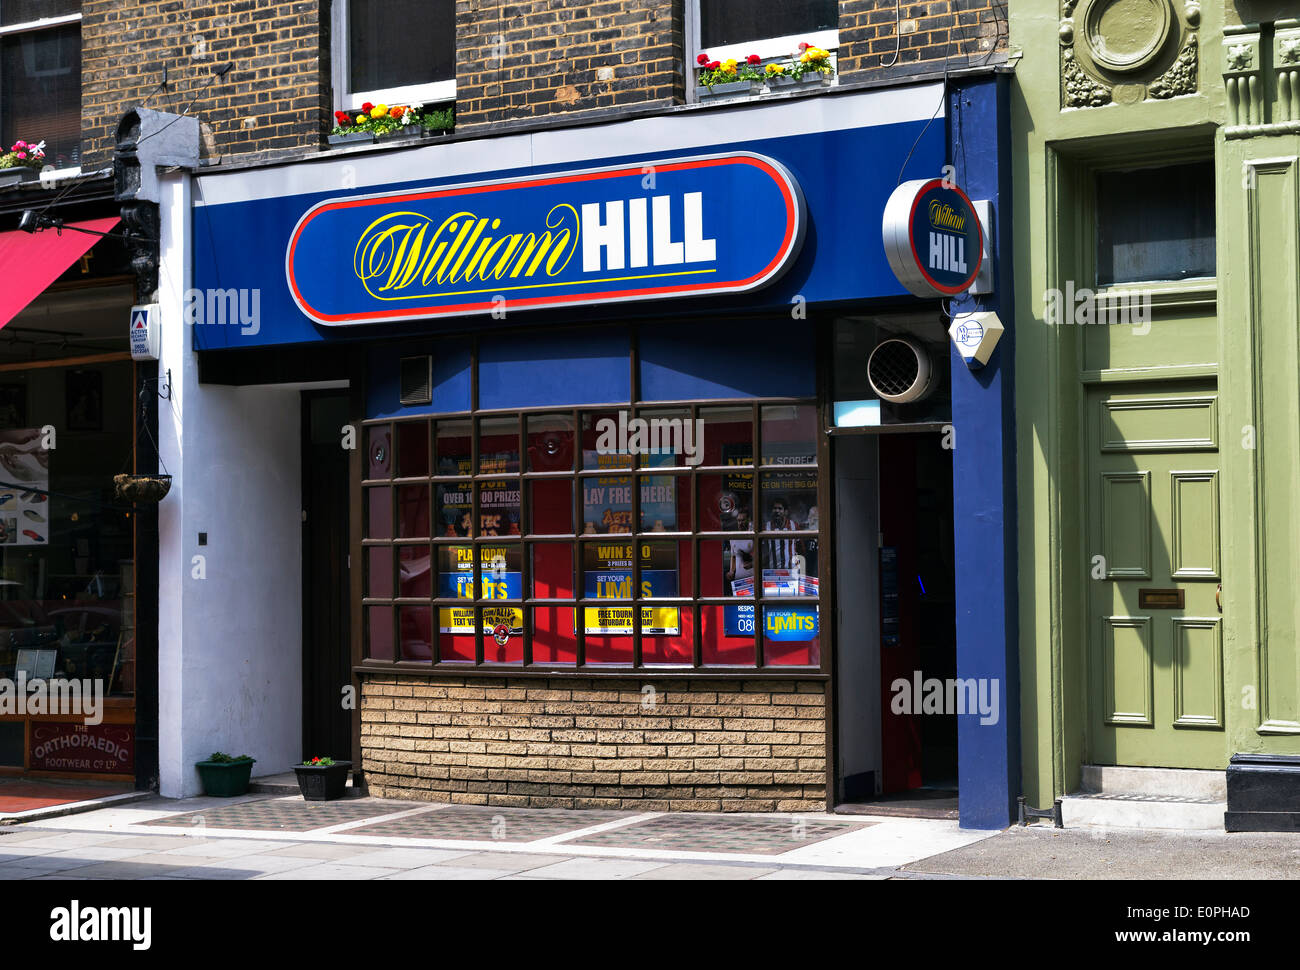 William Hill Betting Shop, Paddington Street, Marylebone, London, England, UK Banque D'Images